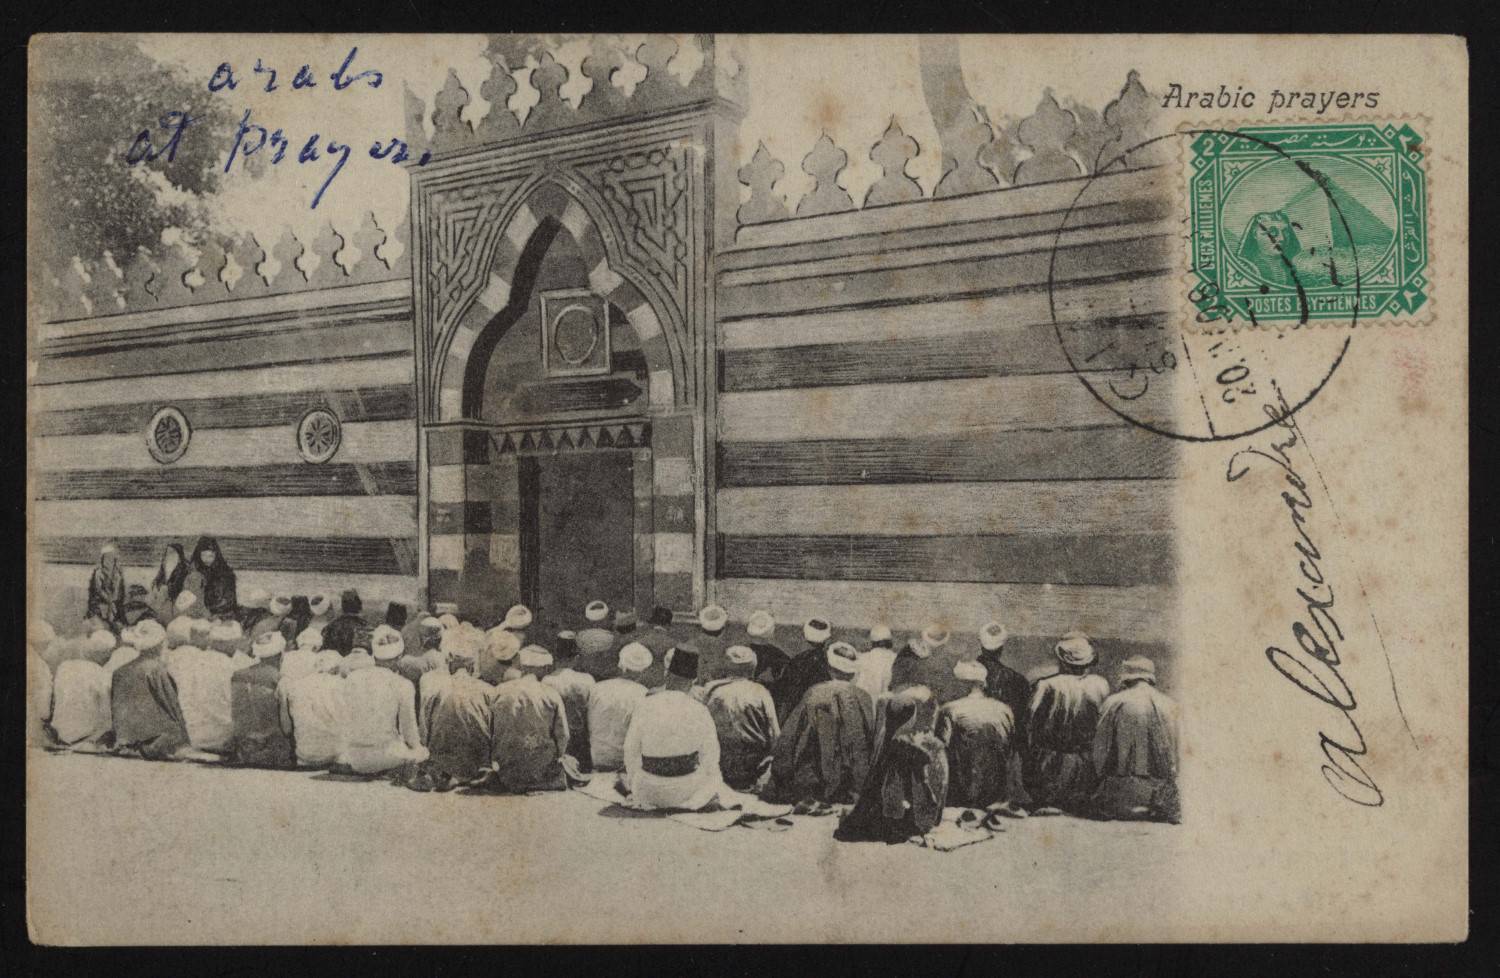 Postcard of "Arabic Prayers" in Egypt